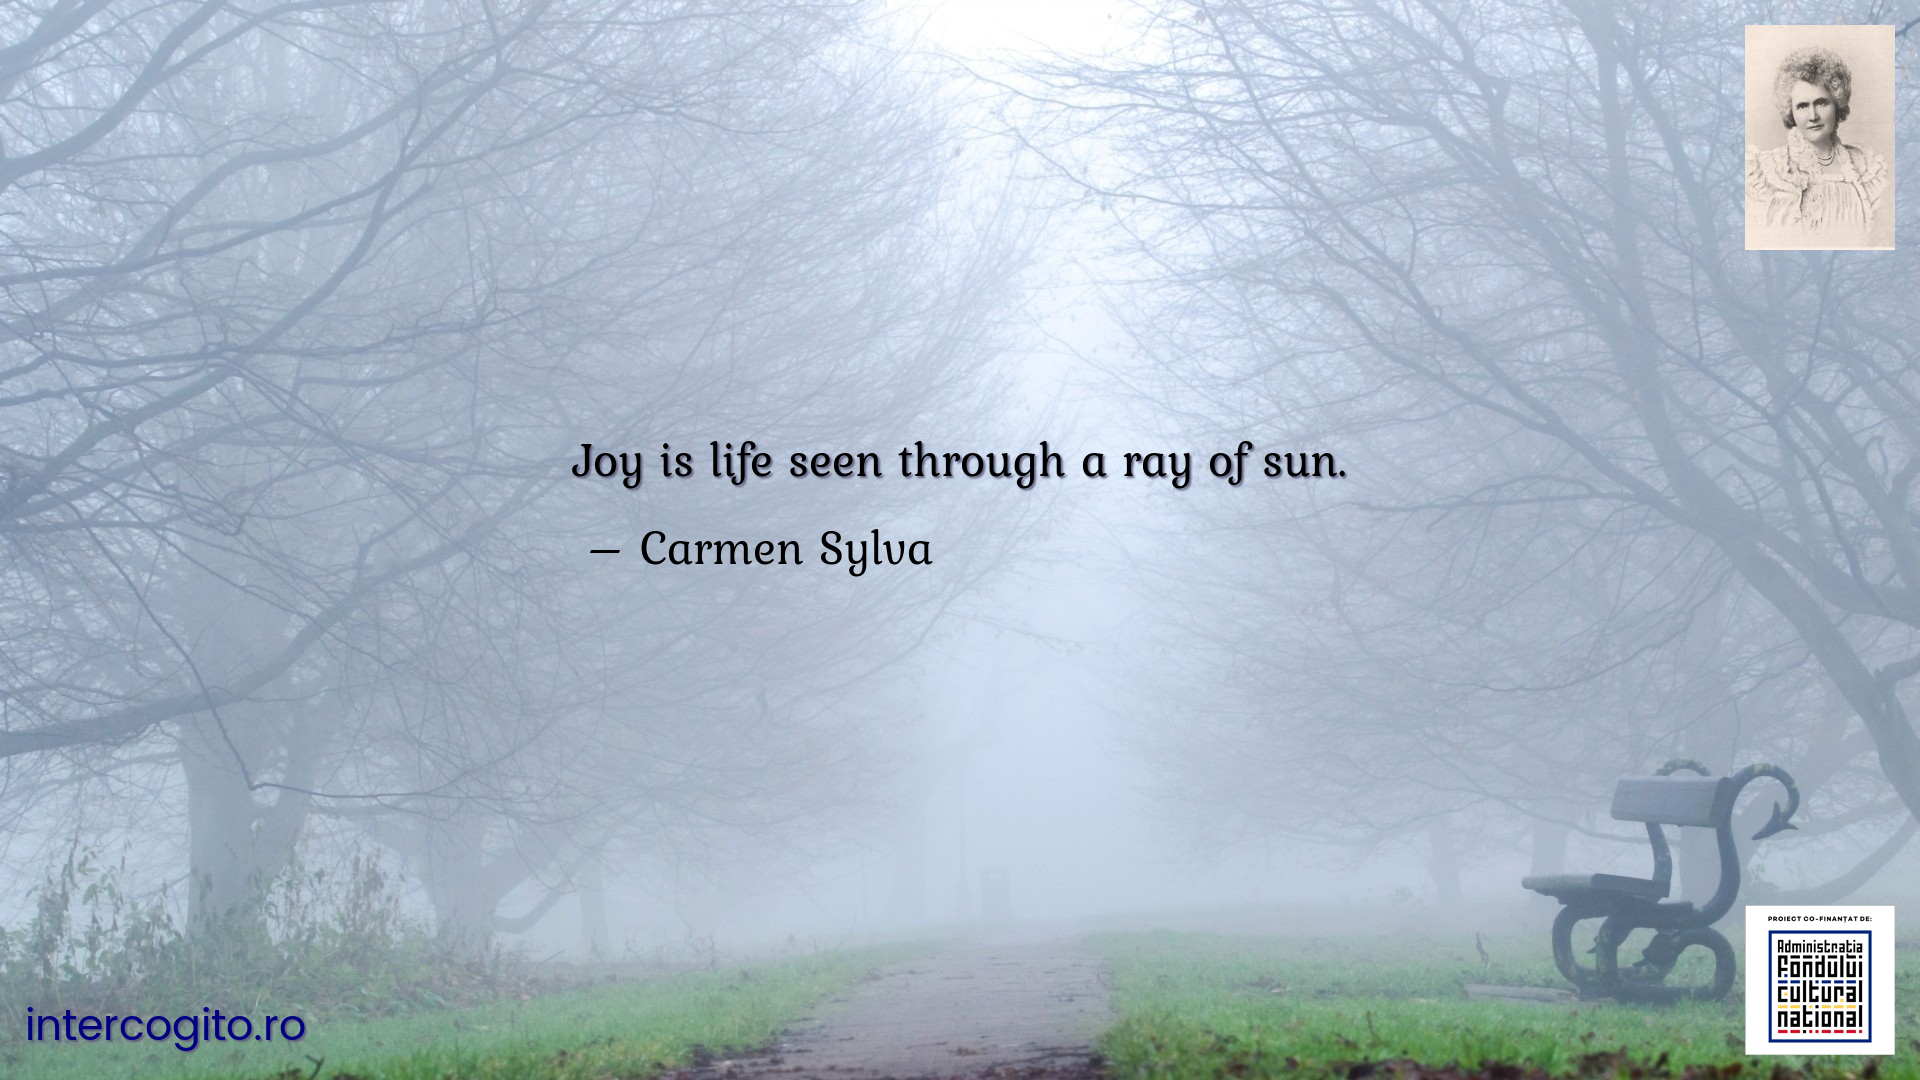 Joy is life seen through a ray of sun.